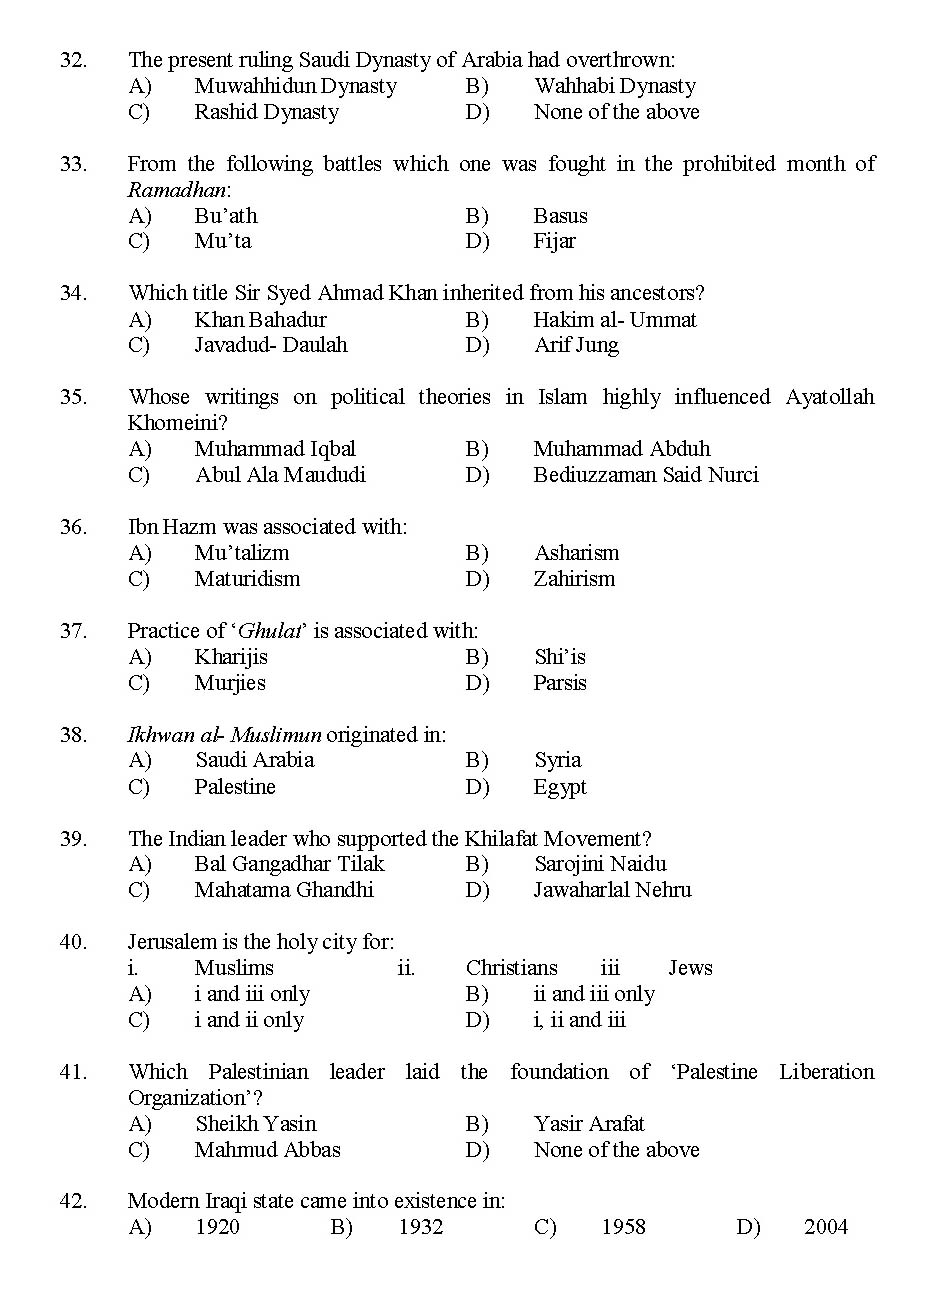 Kerala SET Islamic History Exam 2015 Question Code 15616 4